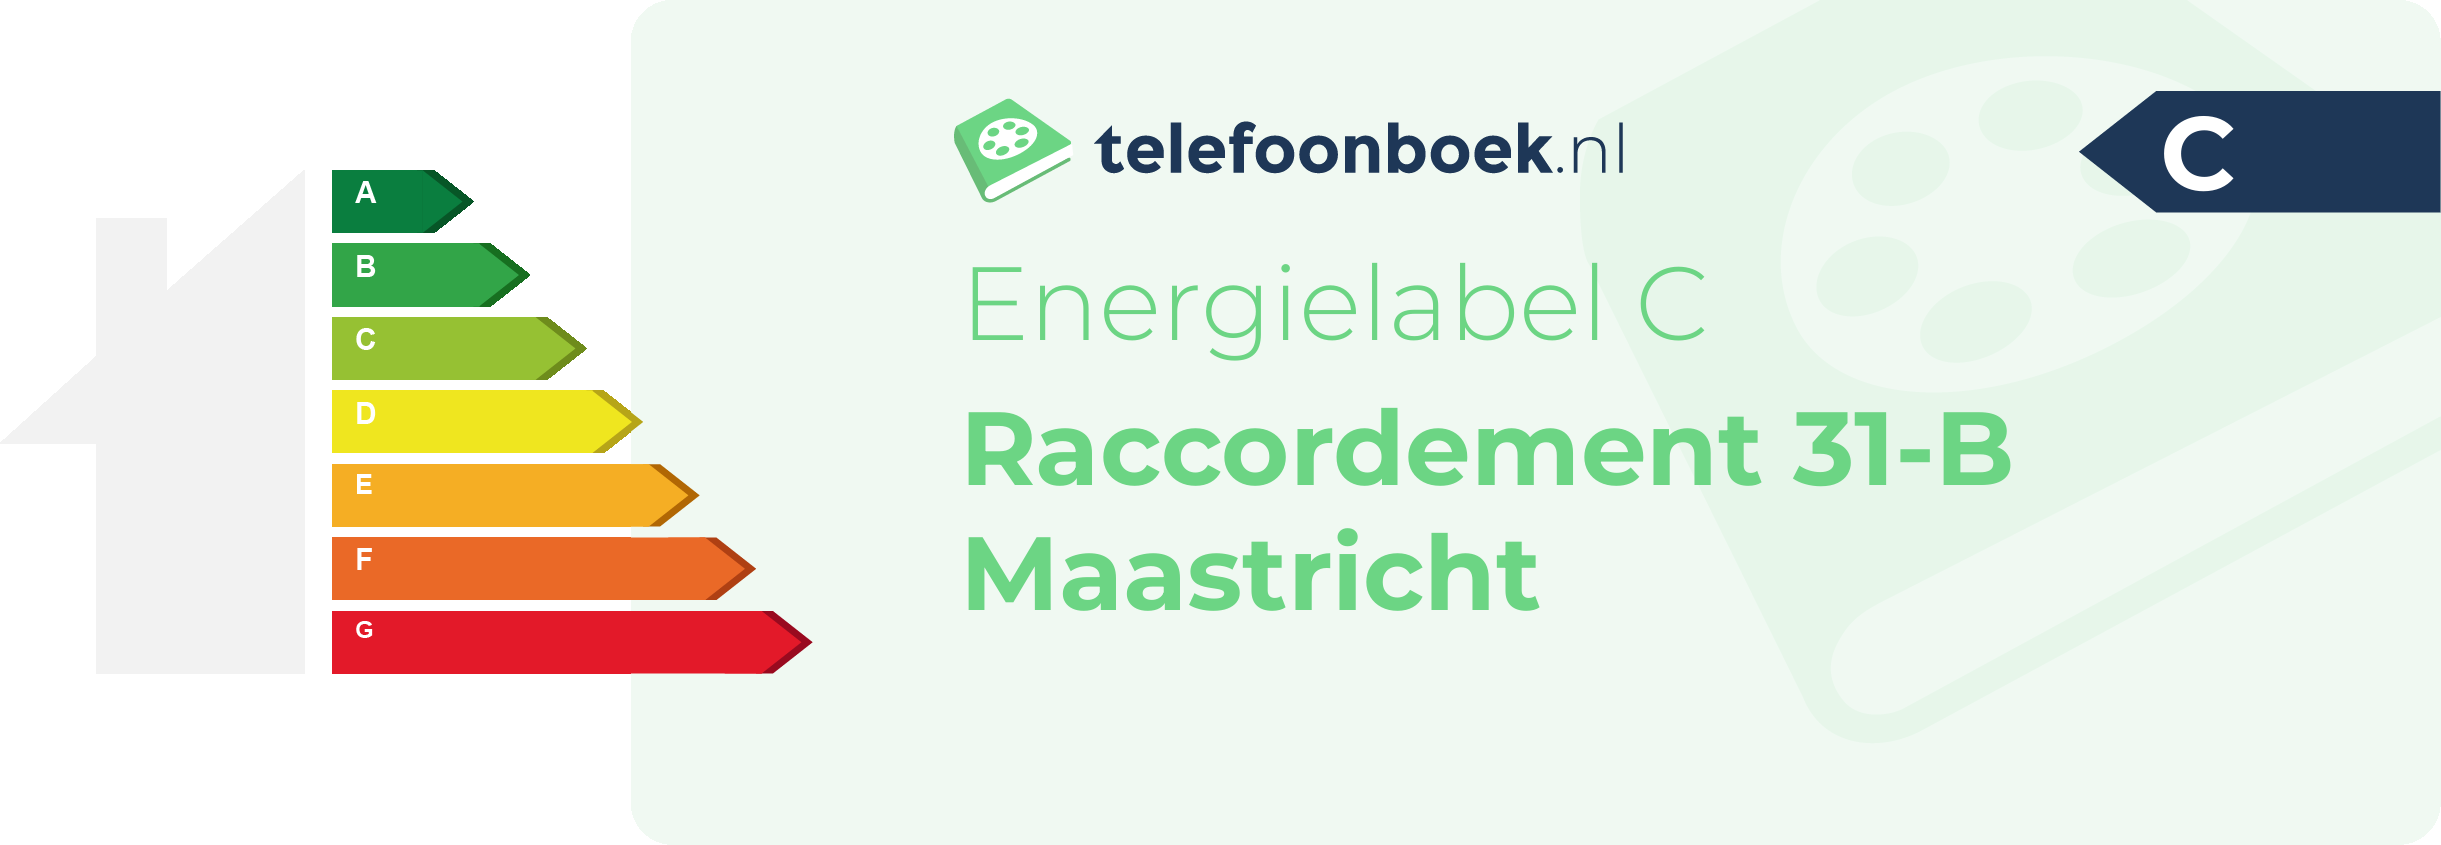 Energielabel Raccordement 31-B Maastricht